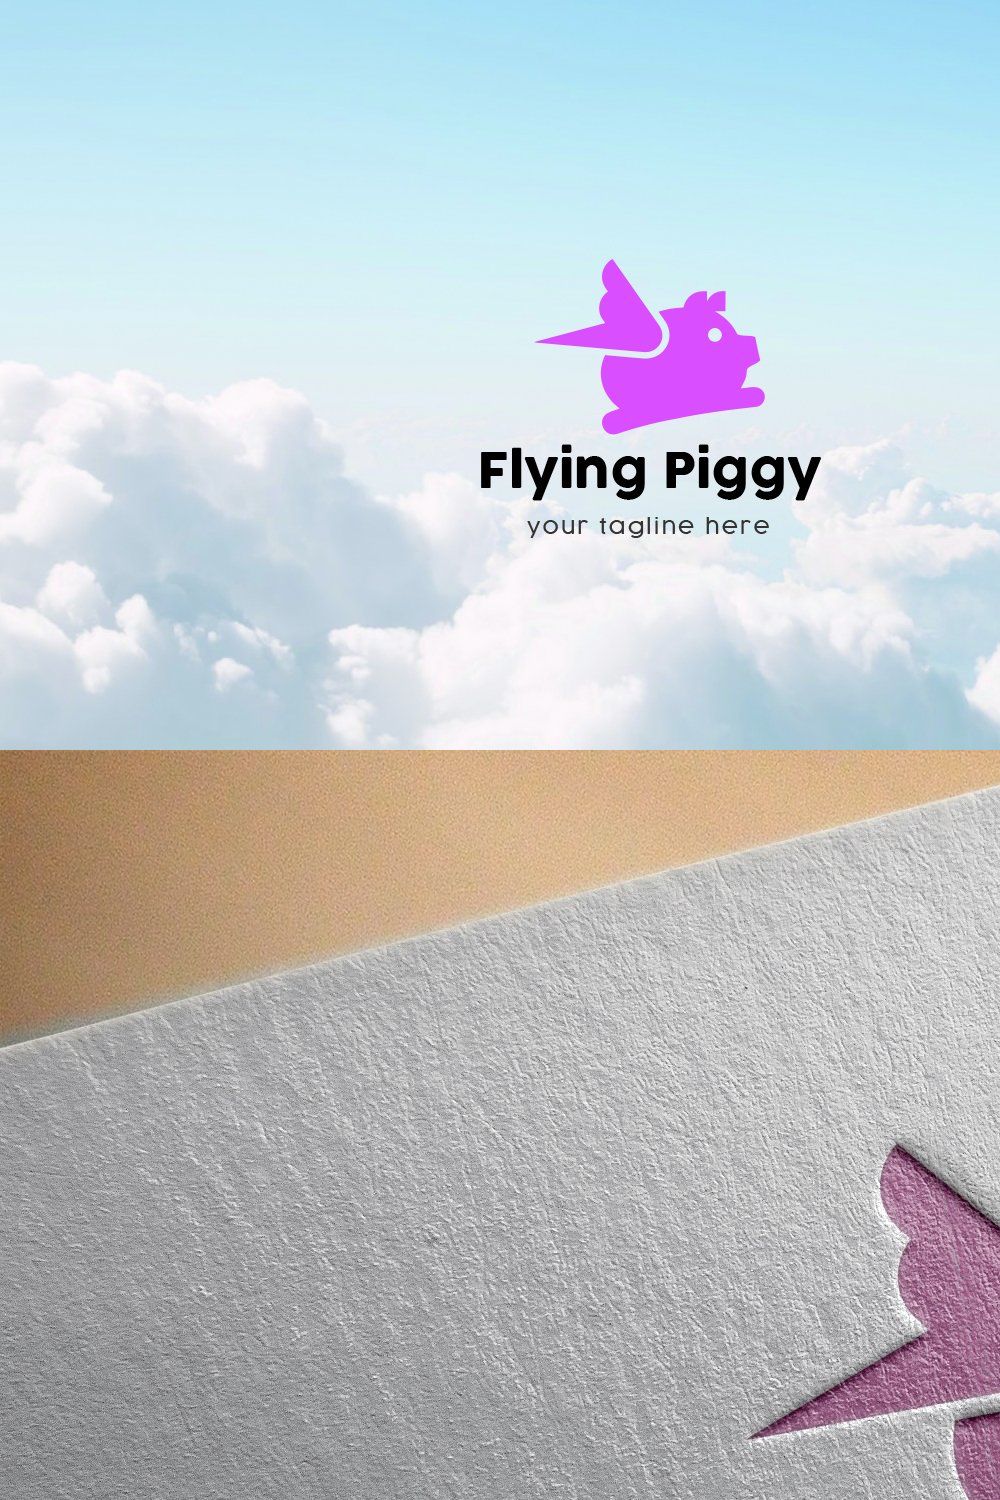 Flying Piggy Logo pinterest preview image.